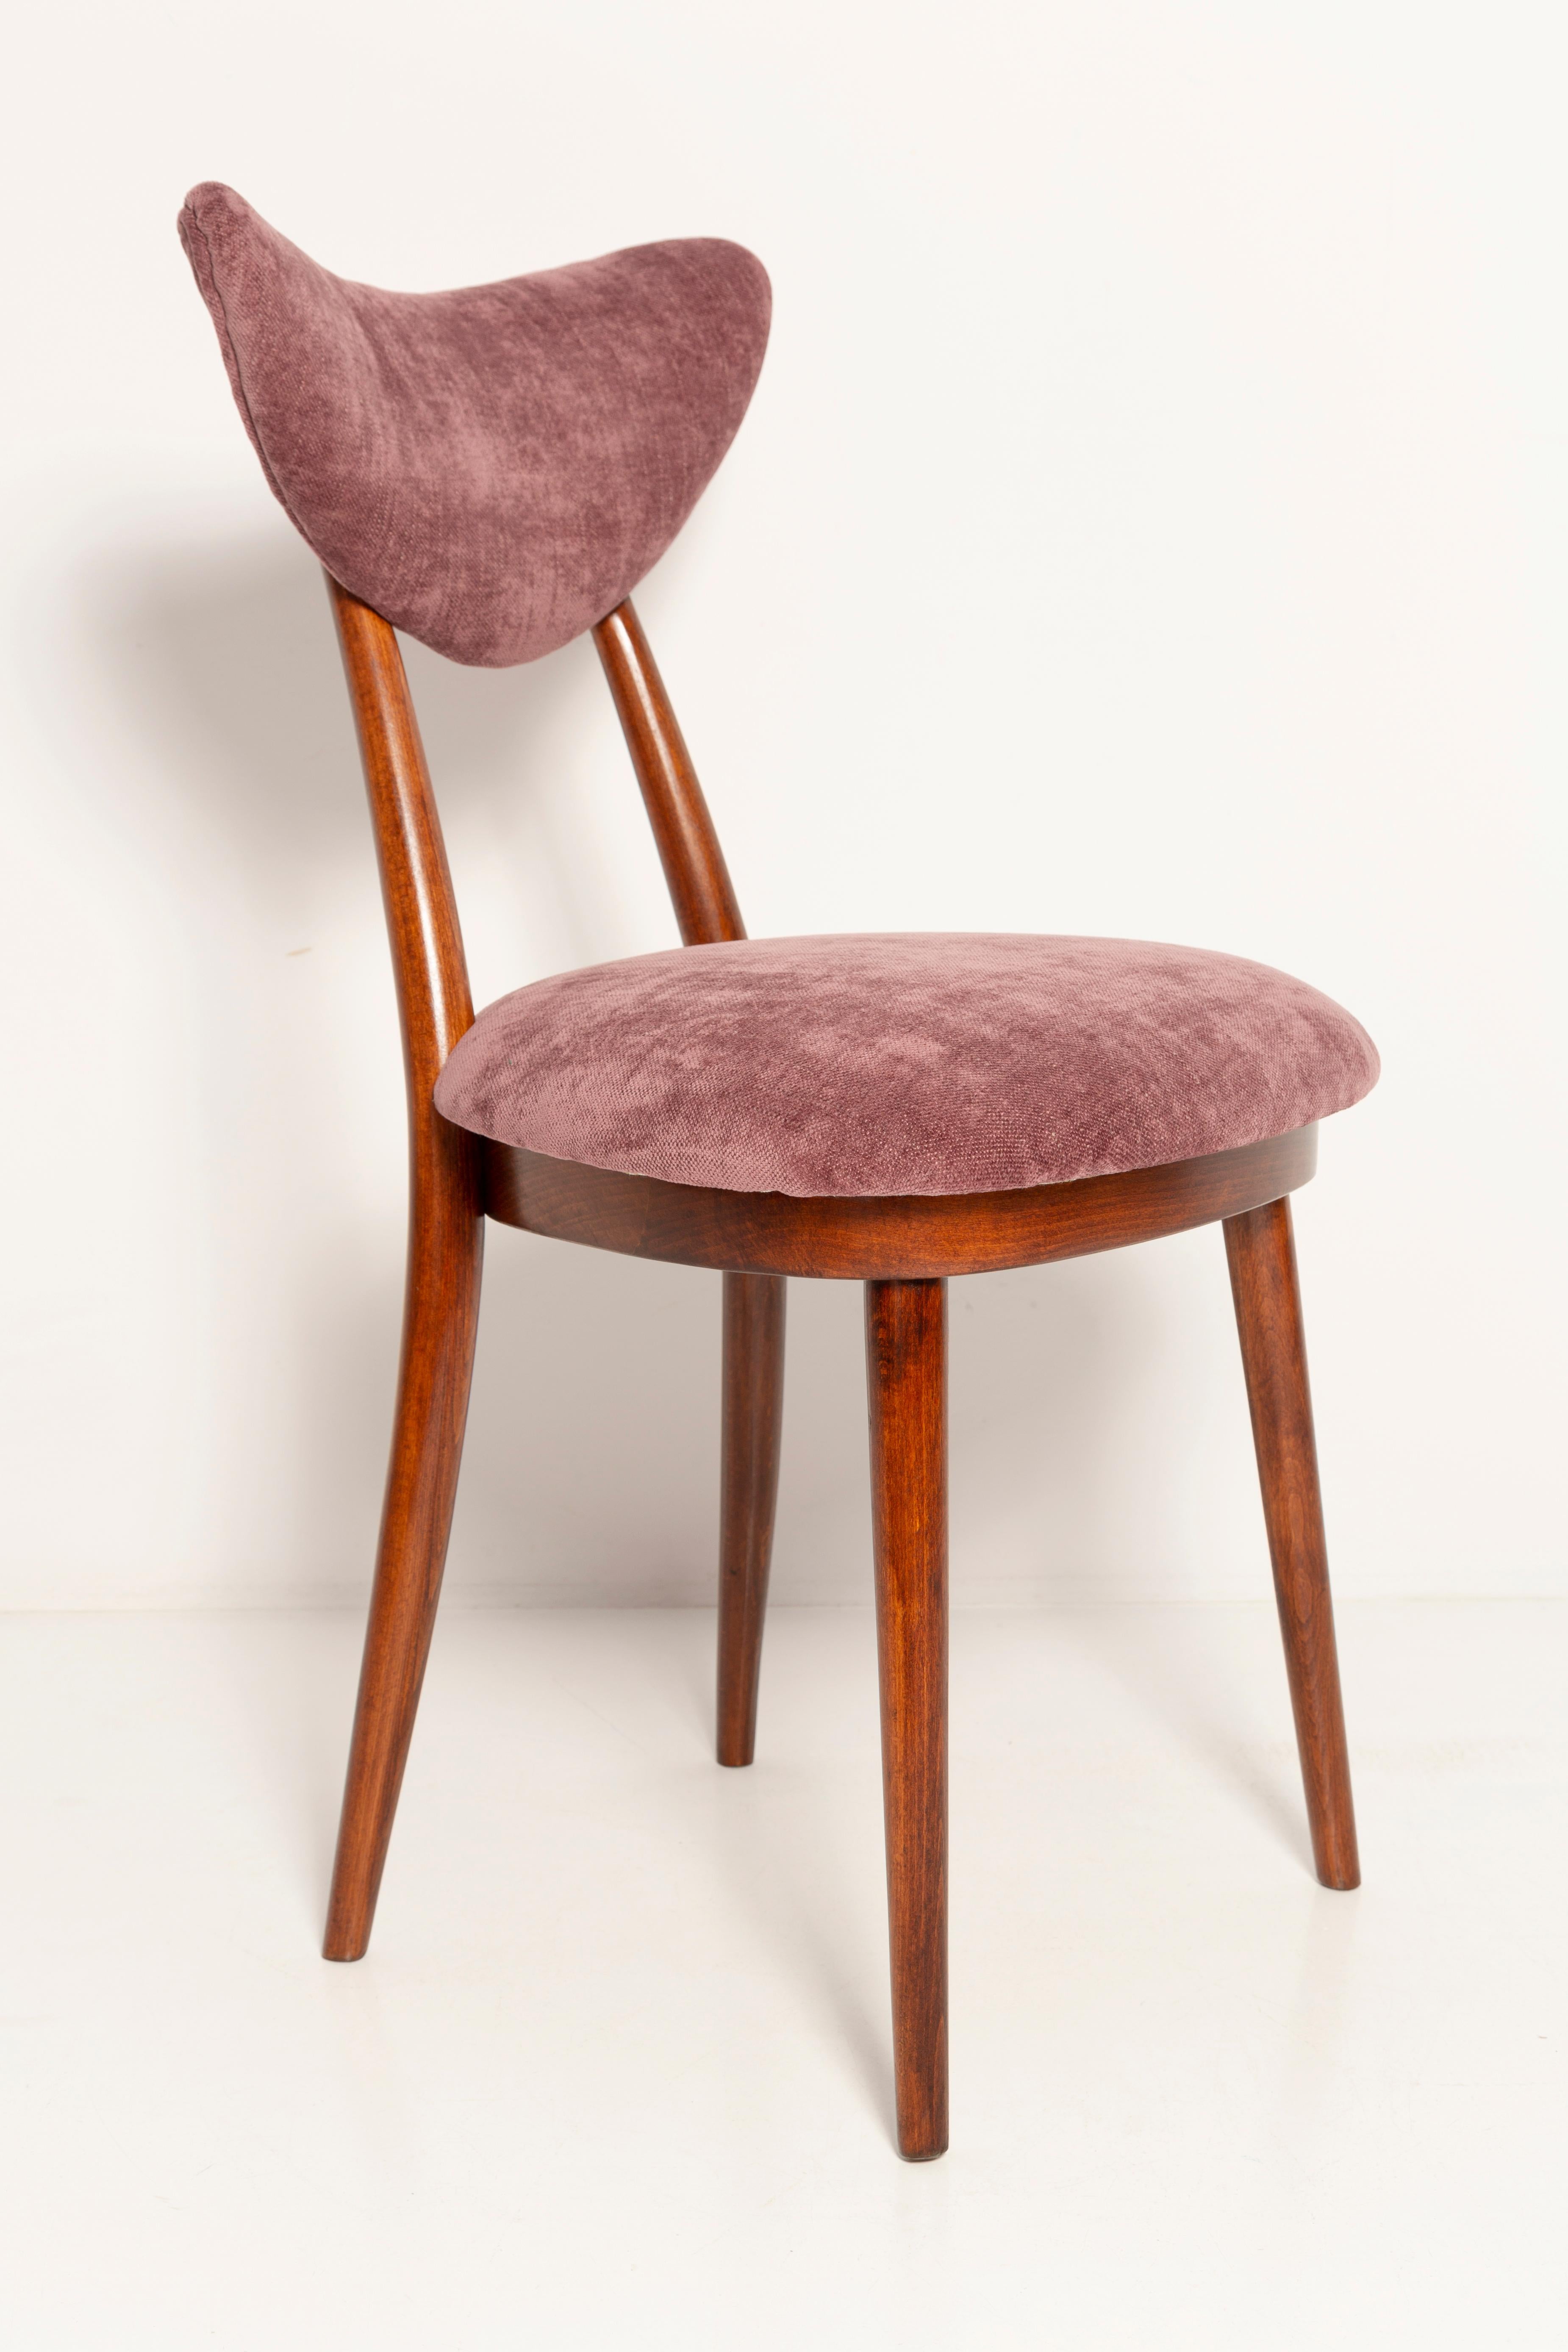 20th Century Midcentury Burgundy Pink Violet Velvet Heart Chair, Europe, 1960s For Sale